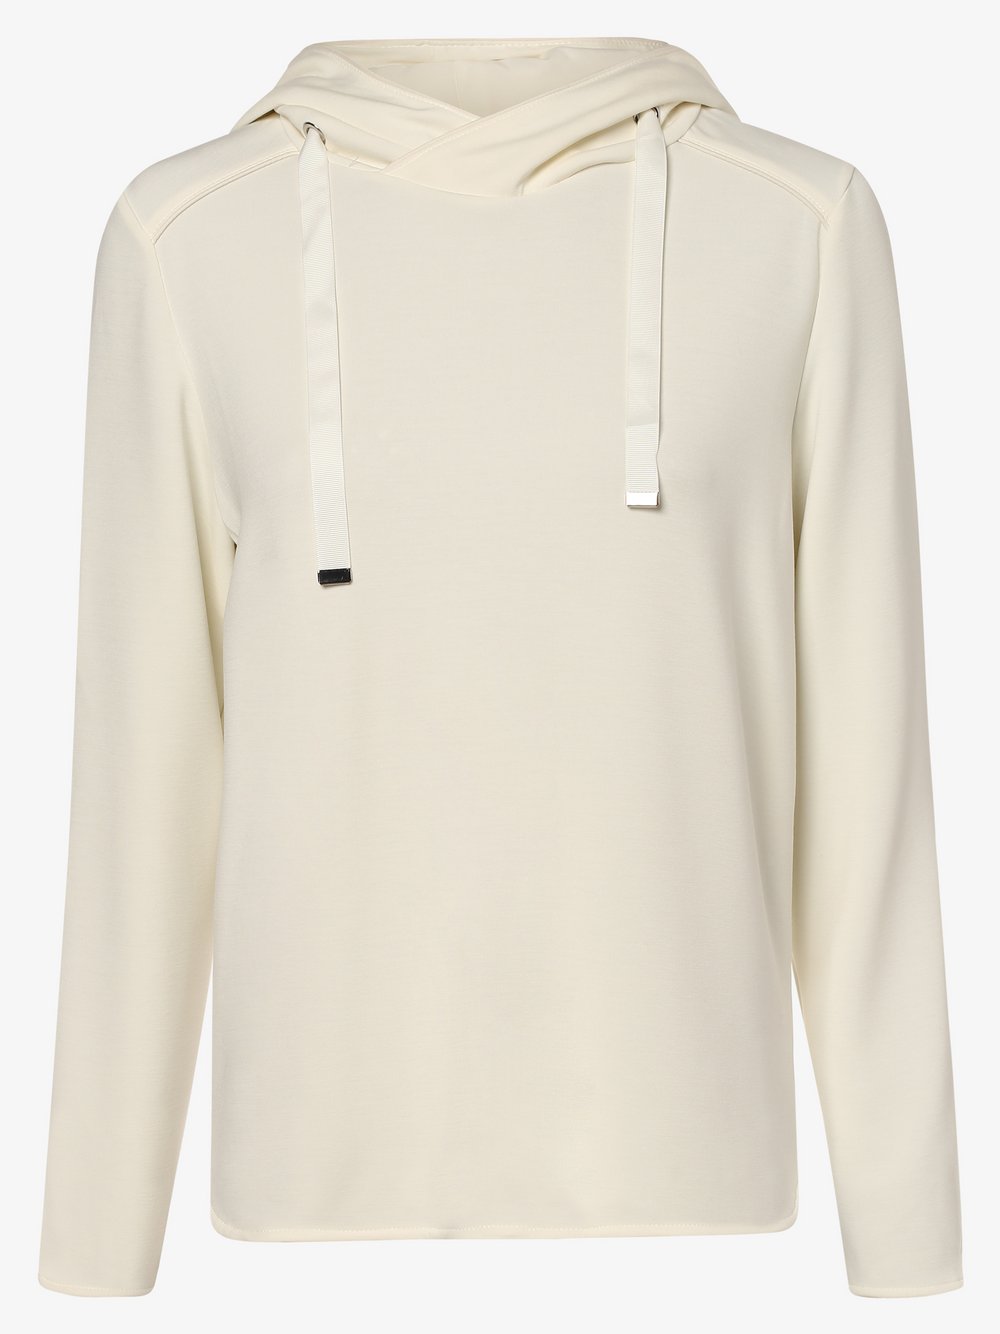 s.Oliver BLACK LABEL - Damska bluza z kapturem, biały